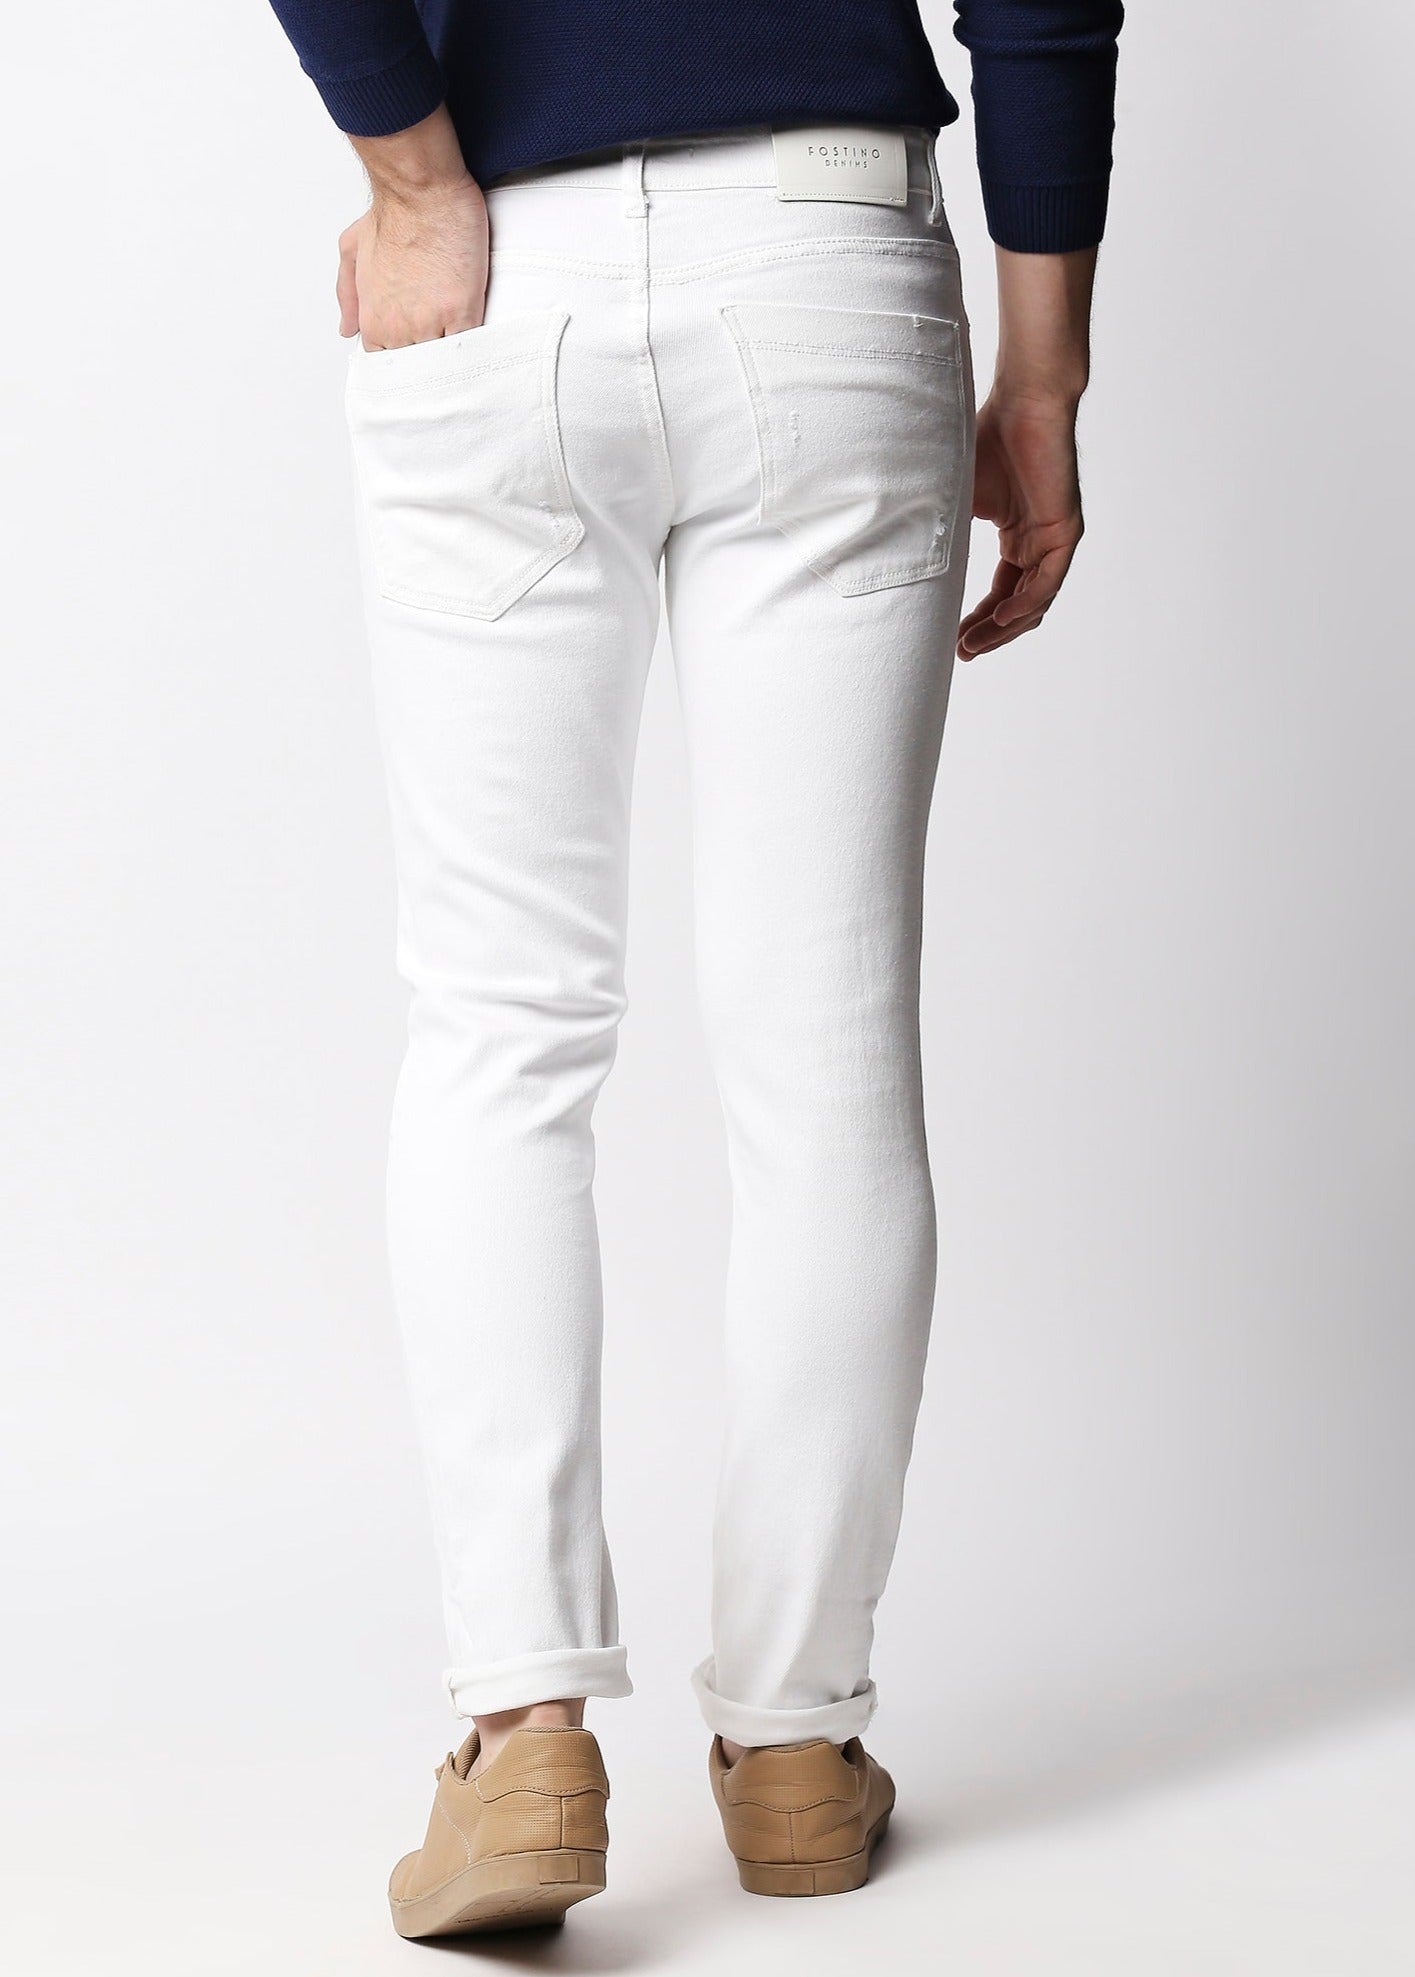 Fostino White Distress Jeans - Fostino Jeans